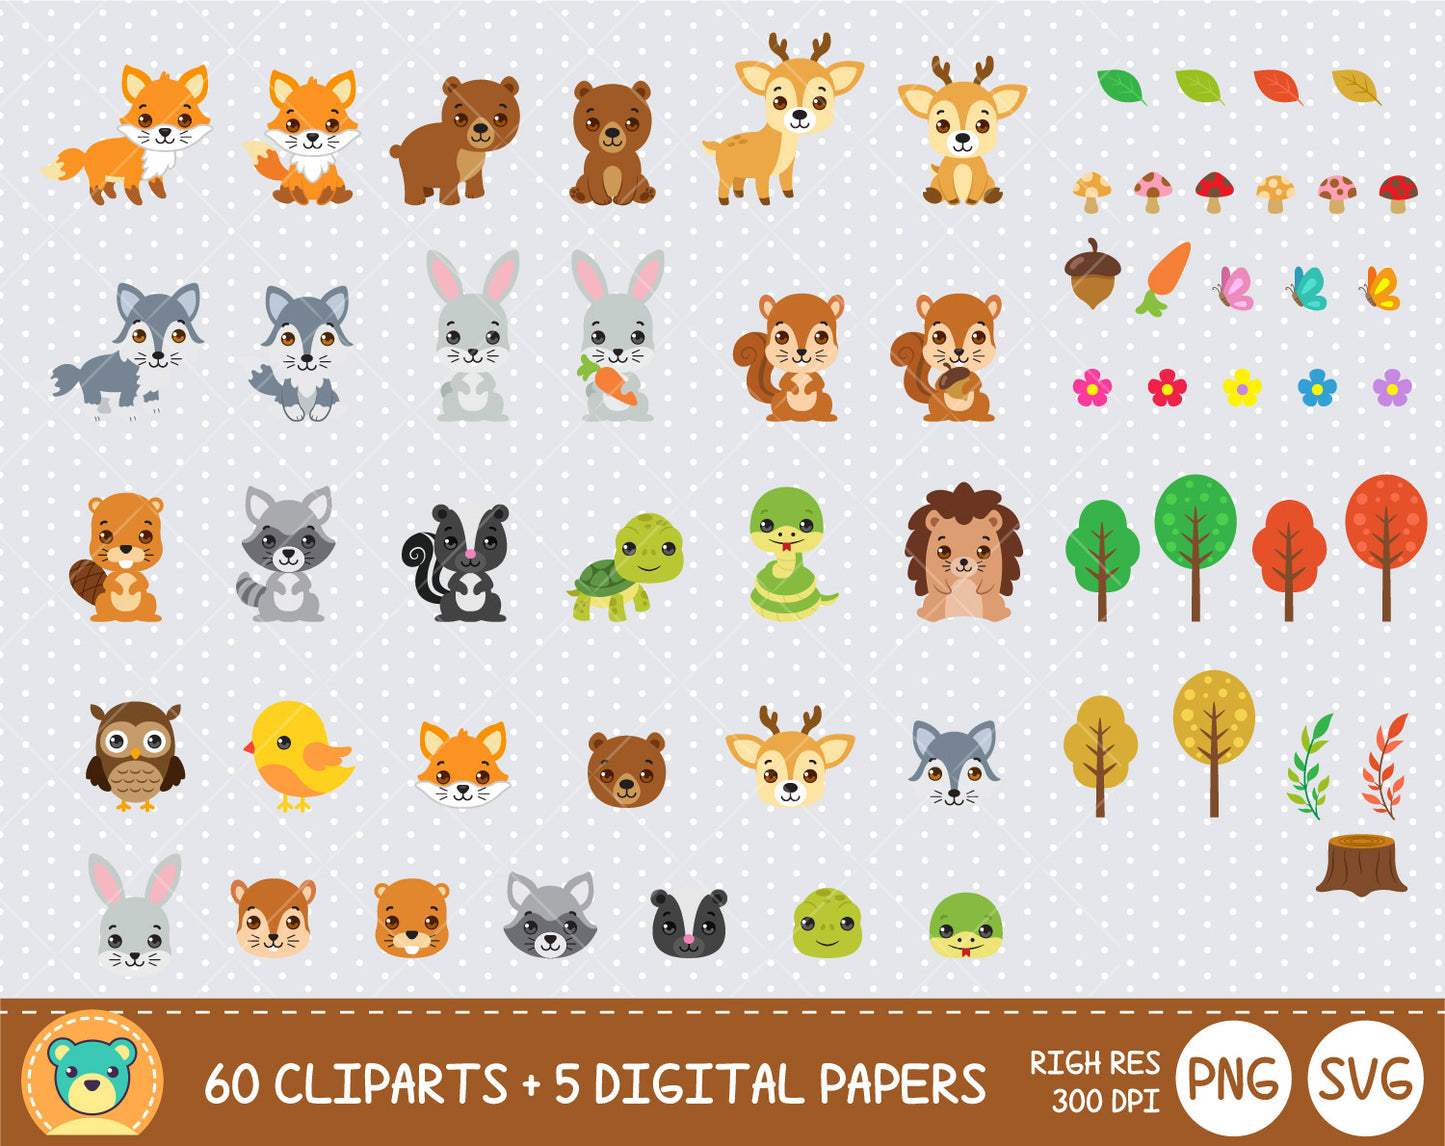 Woodland Animals clipart set, Digital clip art for decoration, scrapbooking, PNG, SVG, instant download